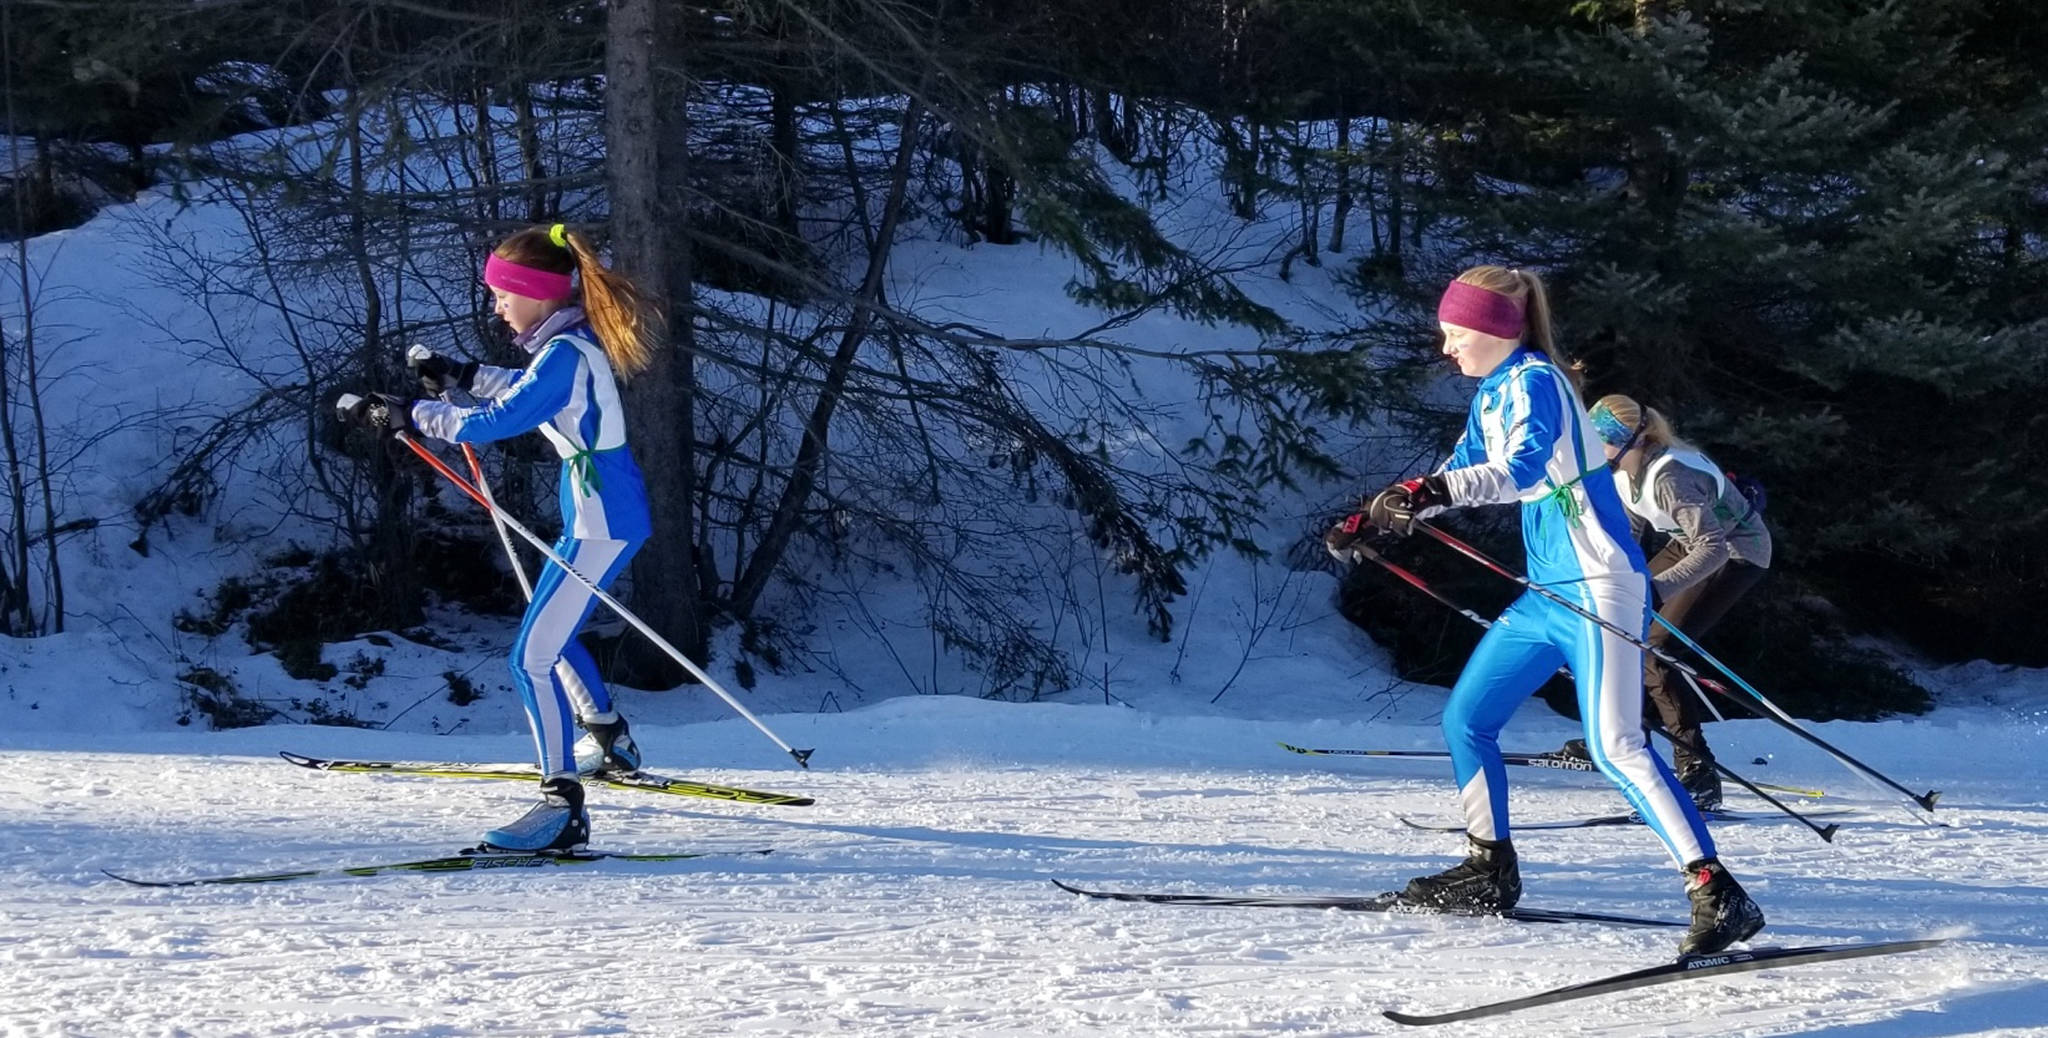 Eryn Field (left) leads a group of skiers at the Seward Middle School Invitational Nordic Ski Race held the weekend of Feb. 22-23, 2019 in Seward, Alaska. (Photo courtesy Mike Gracz)